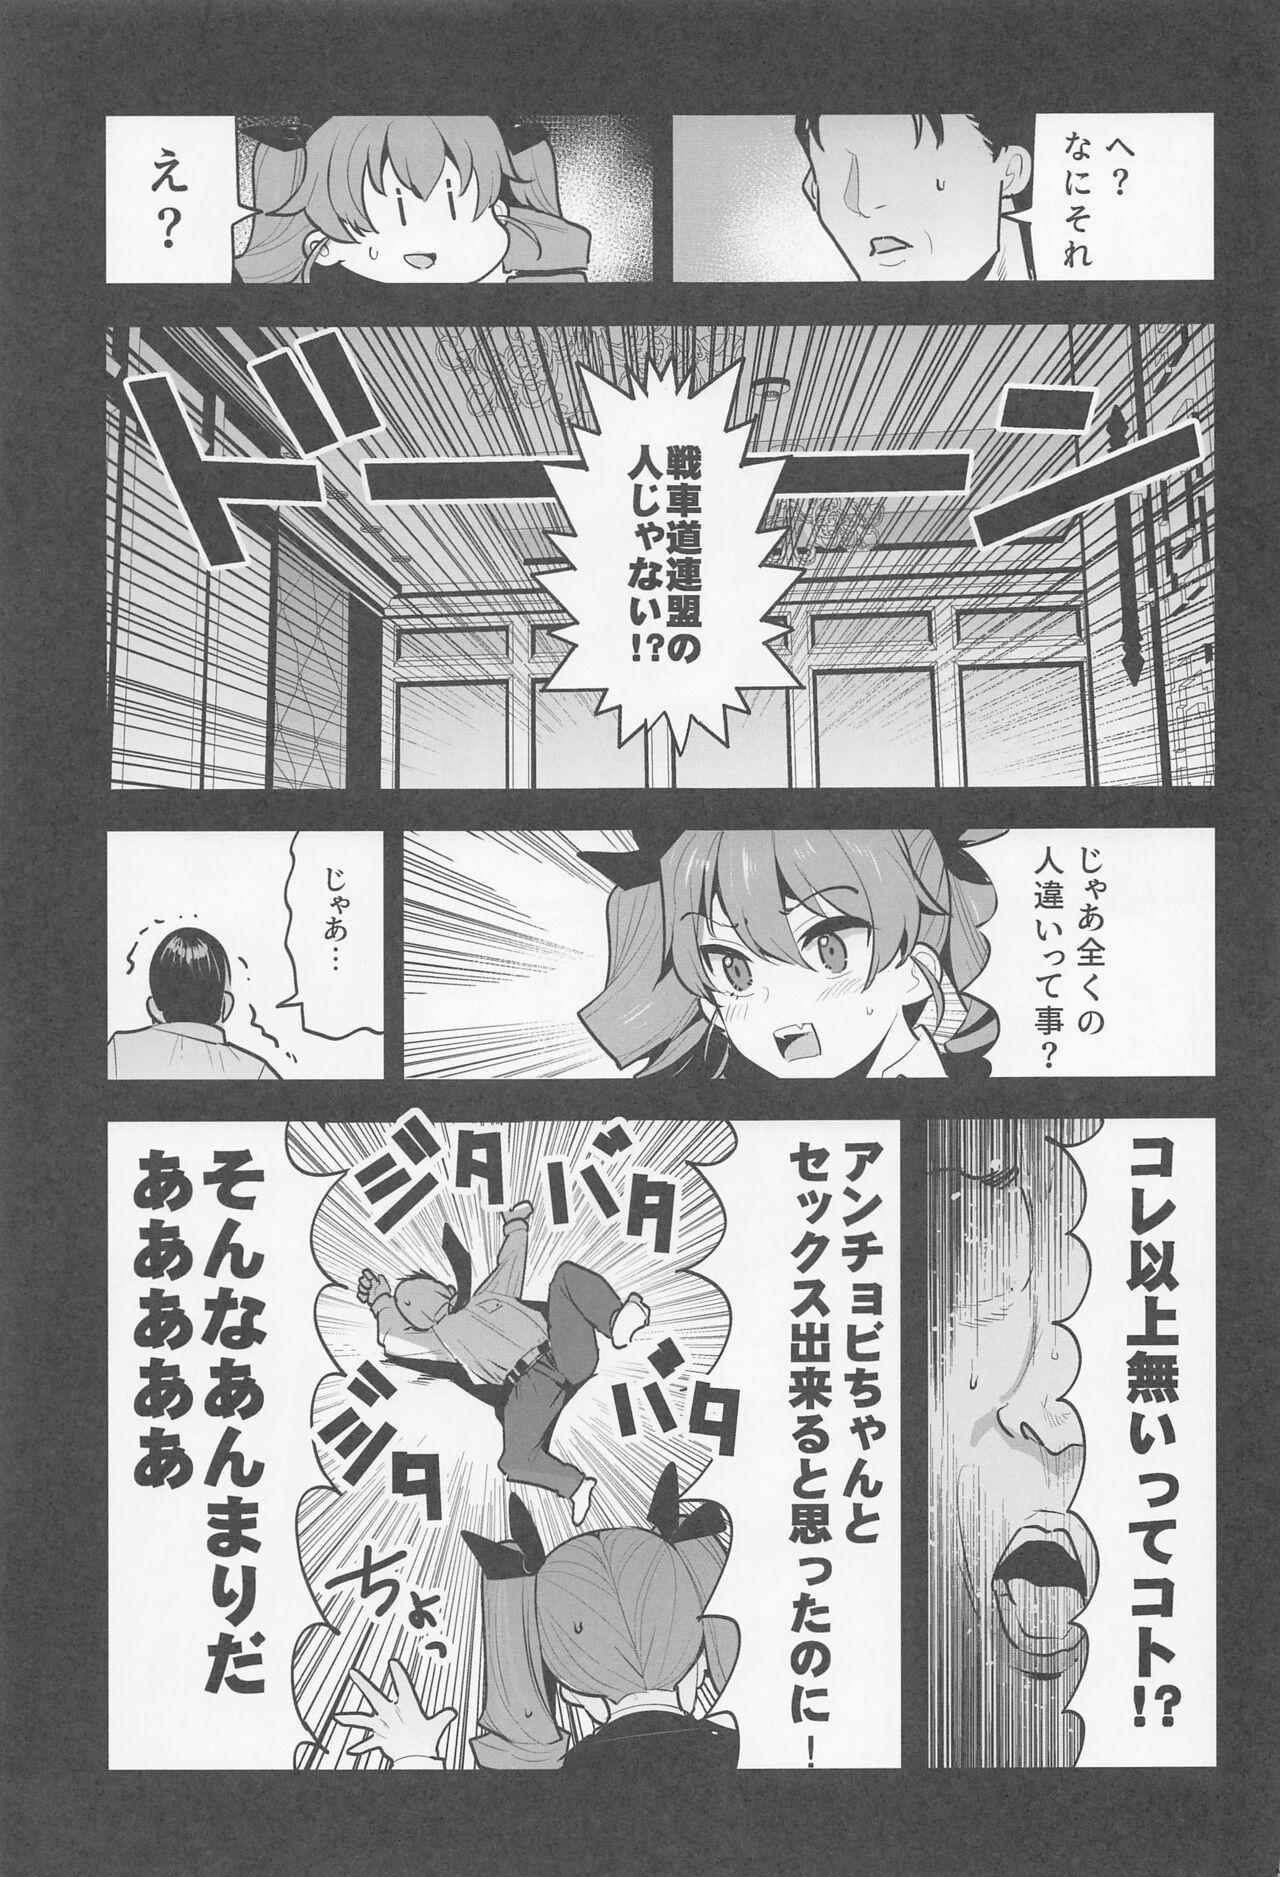 Bisex anchobi dogezadeonegaishitaraippatsuyarasetekuremashita - Girls und panzer Strapon - Page 10